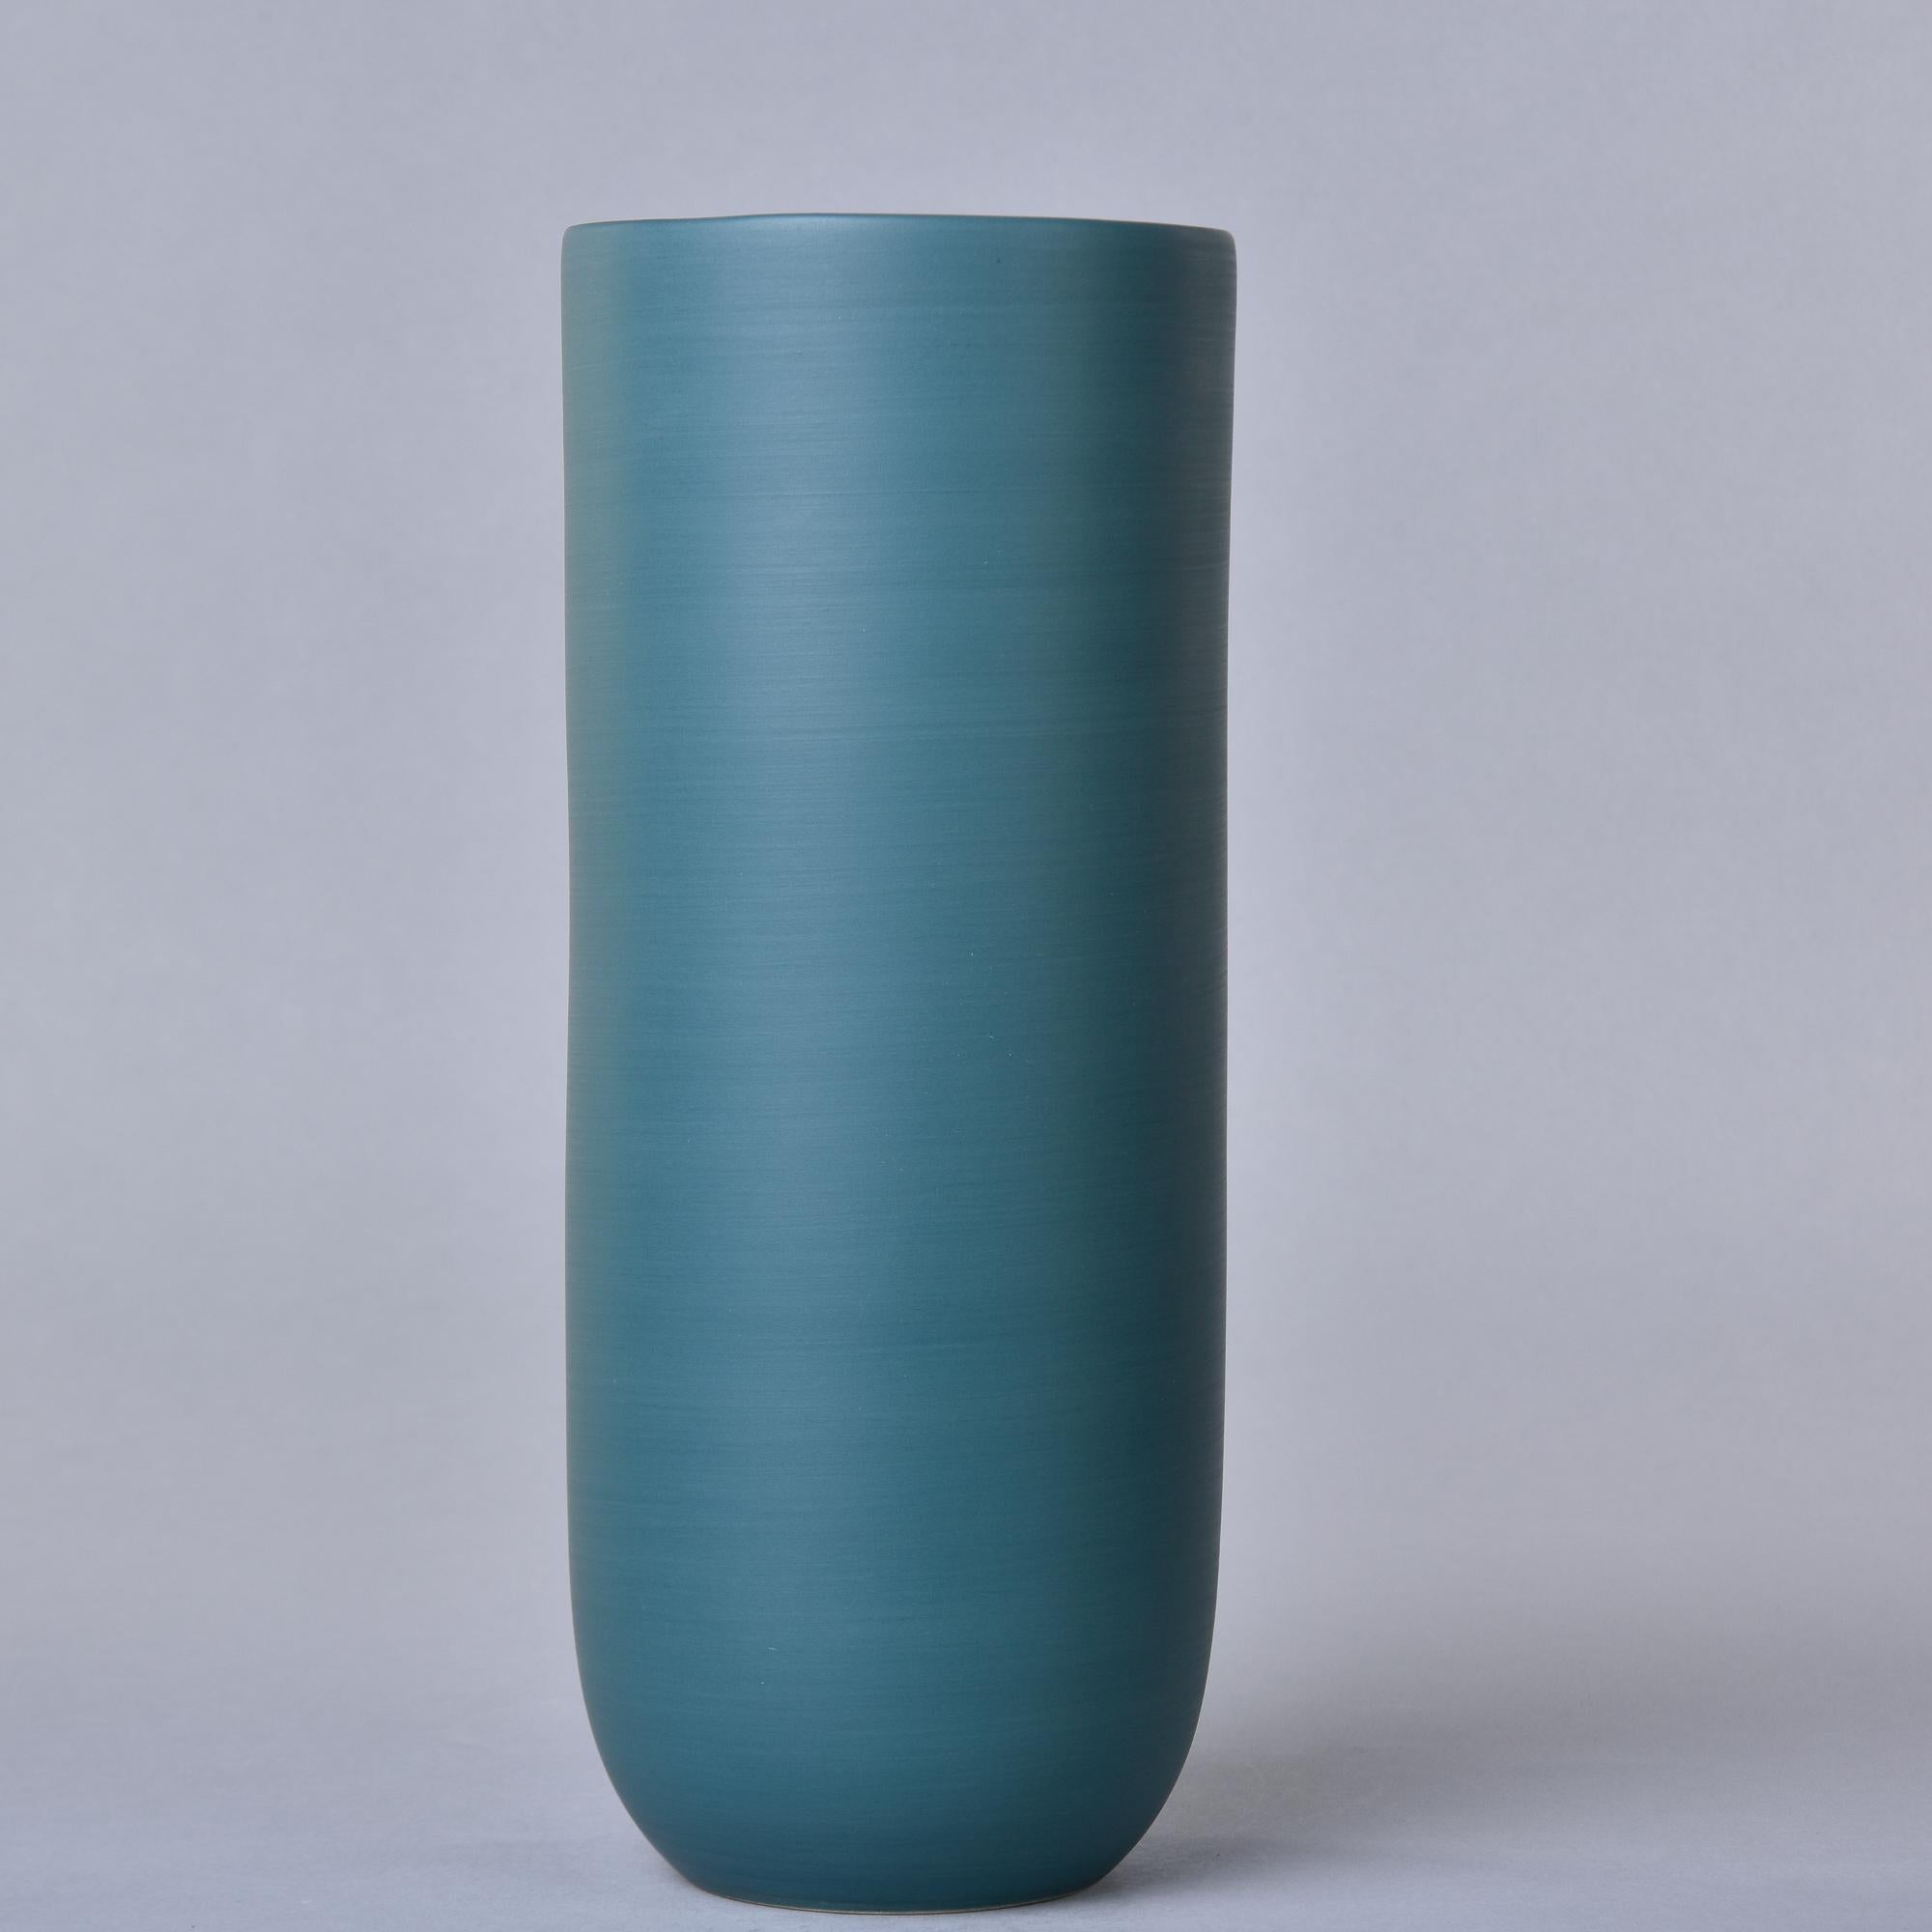 Italian New Rina Menardi Canna 1 Vase in Mint For Sale